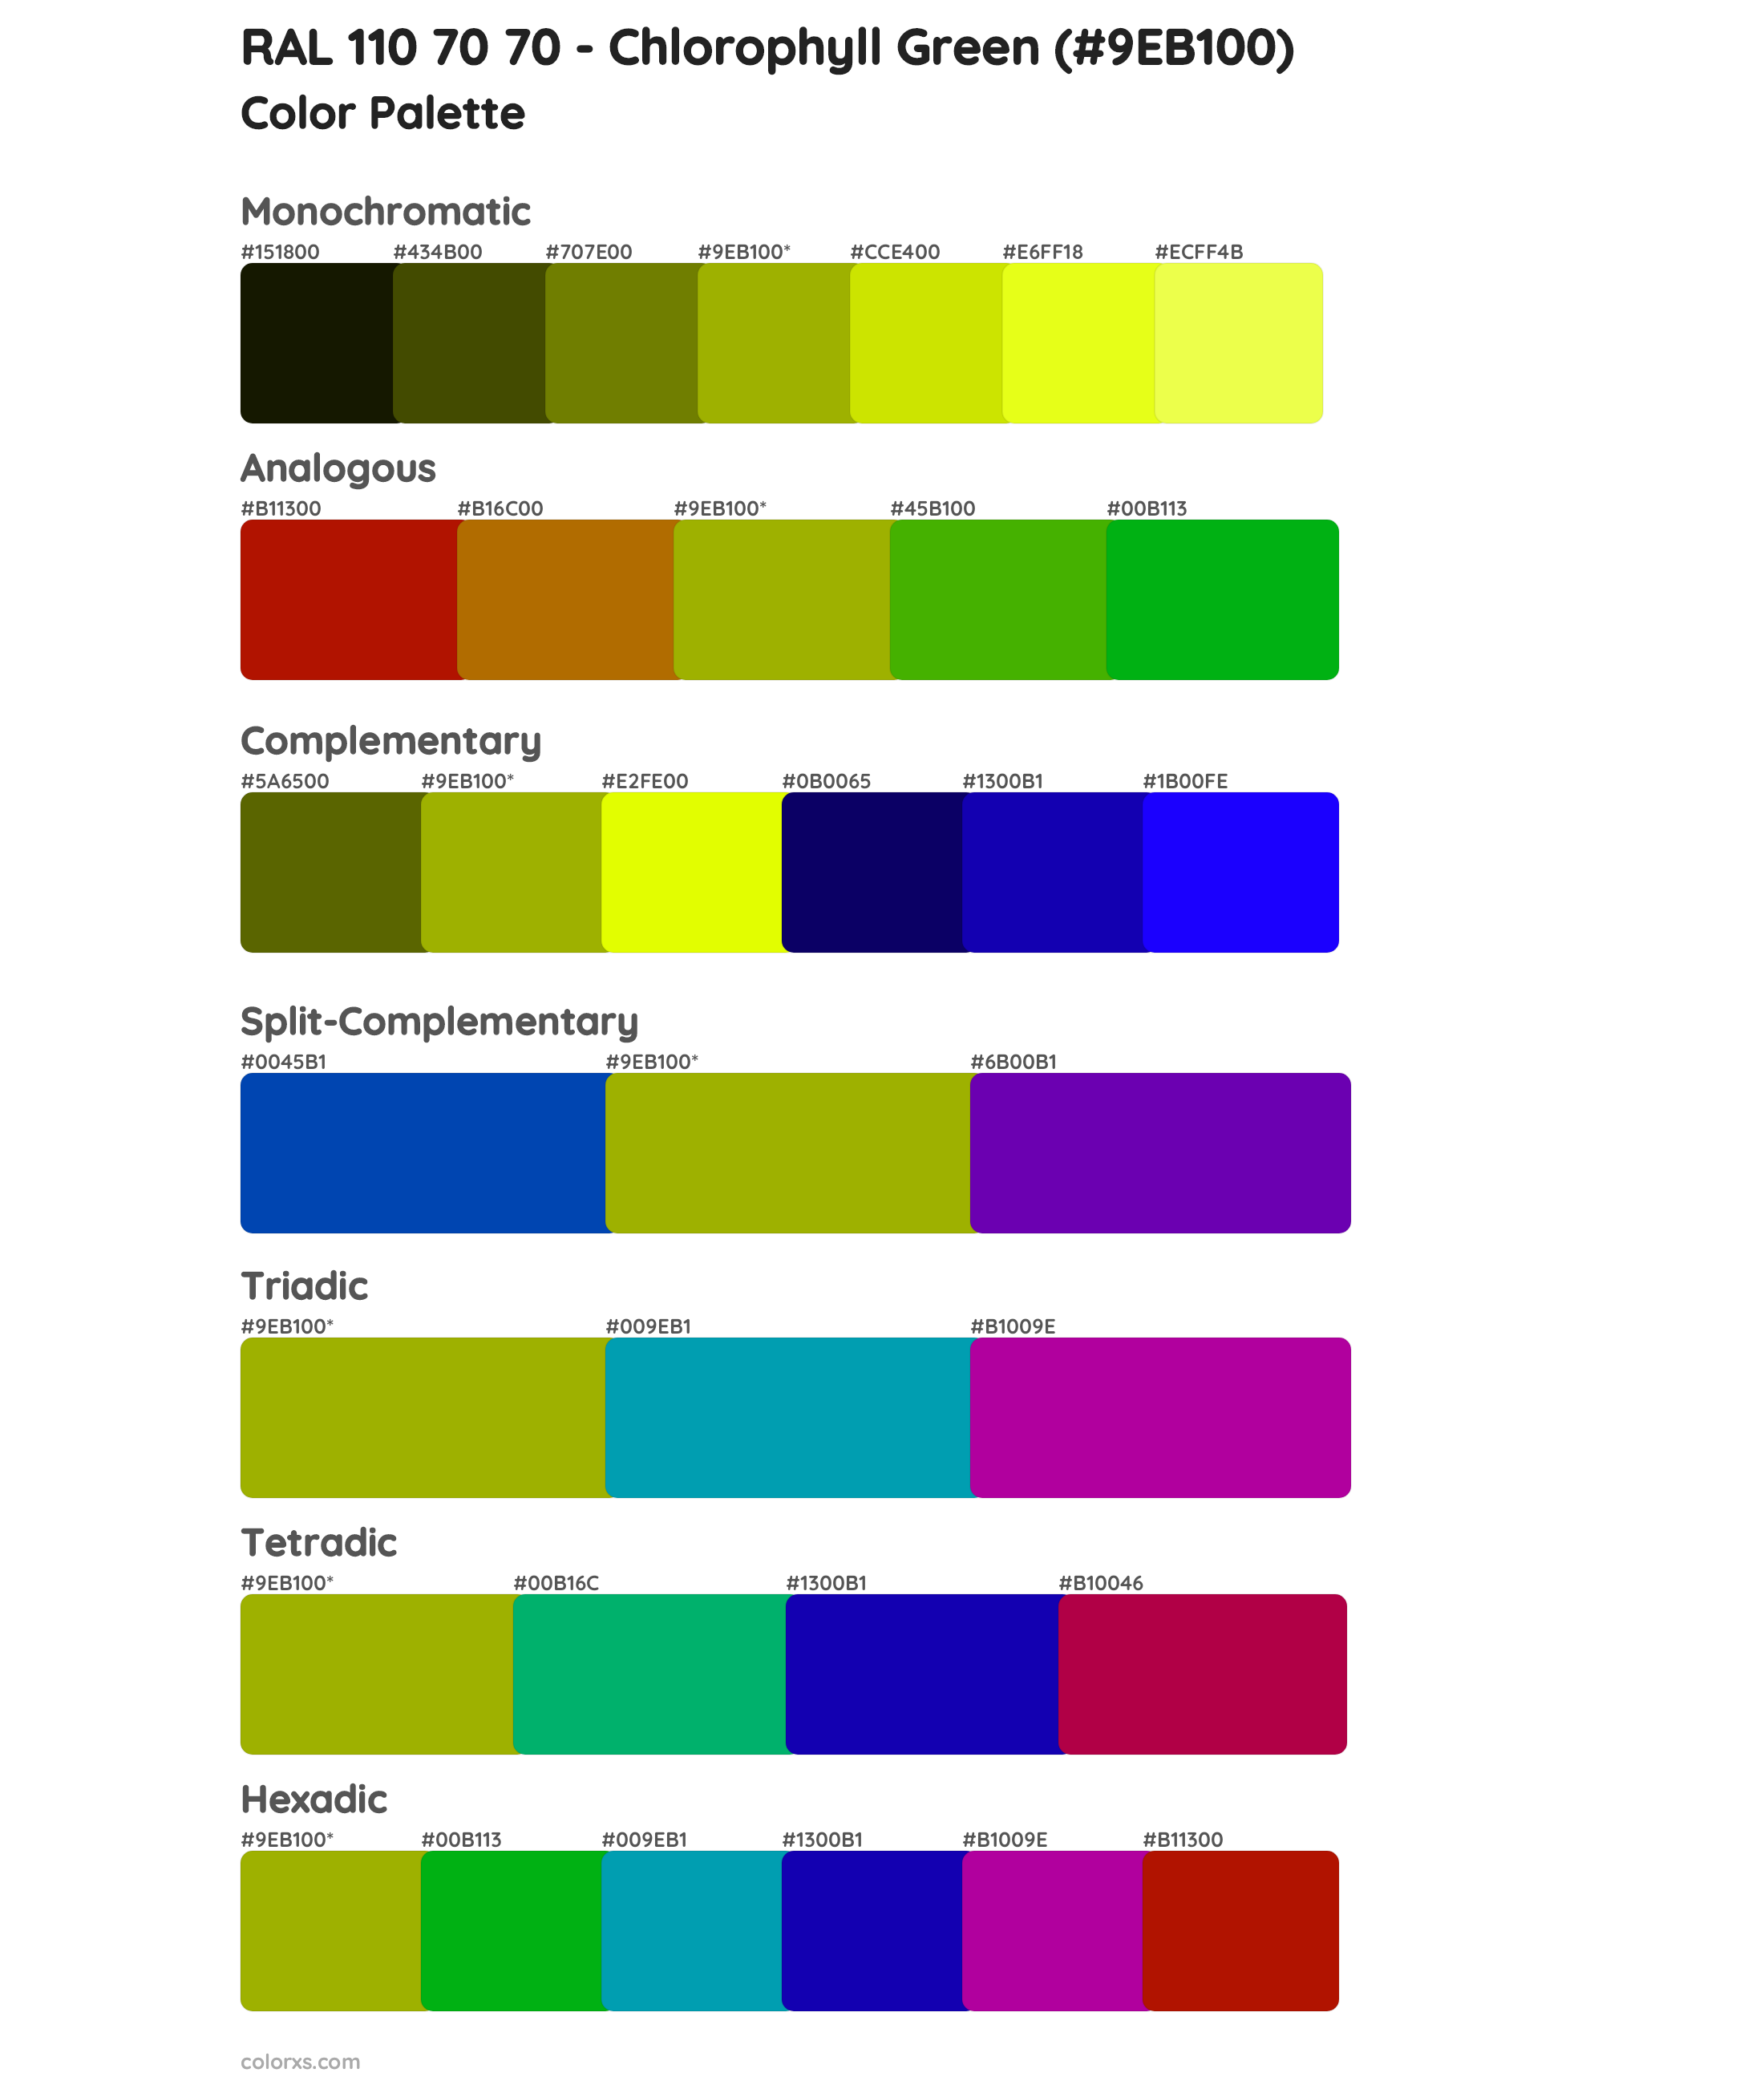 RAL 110 70 70 - Chlorophyll Green Color Scheme Palettes